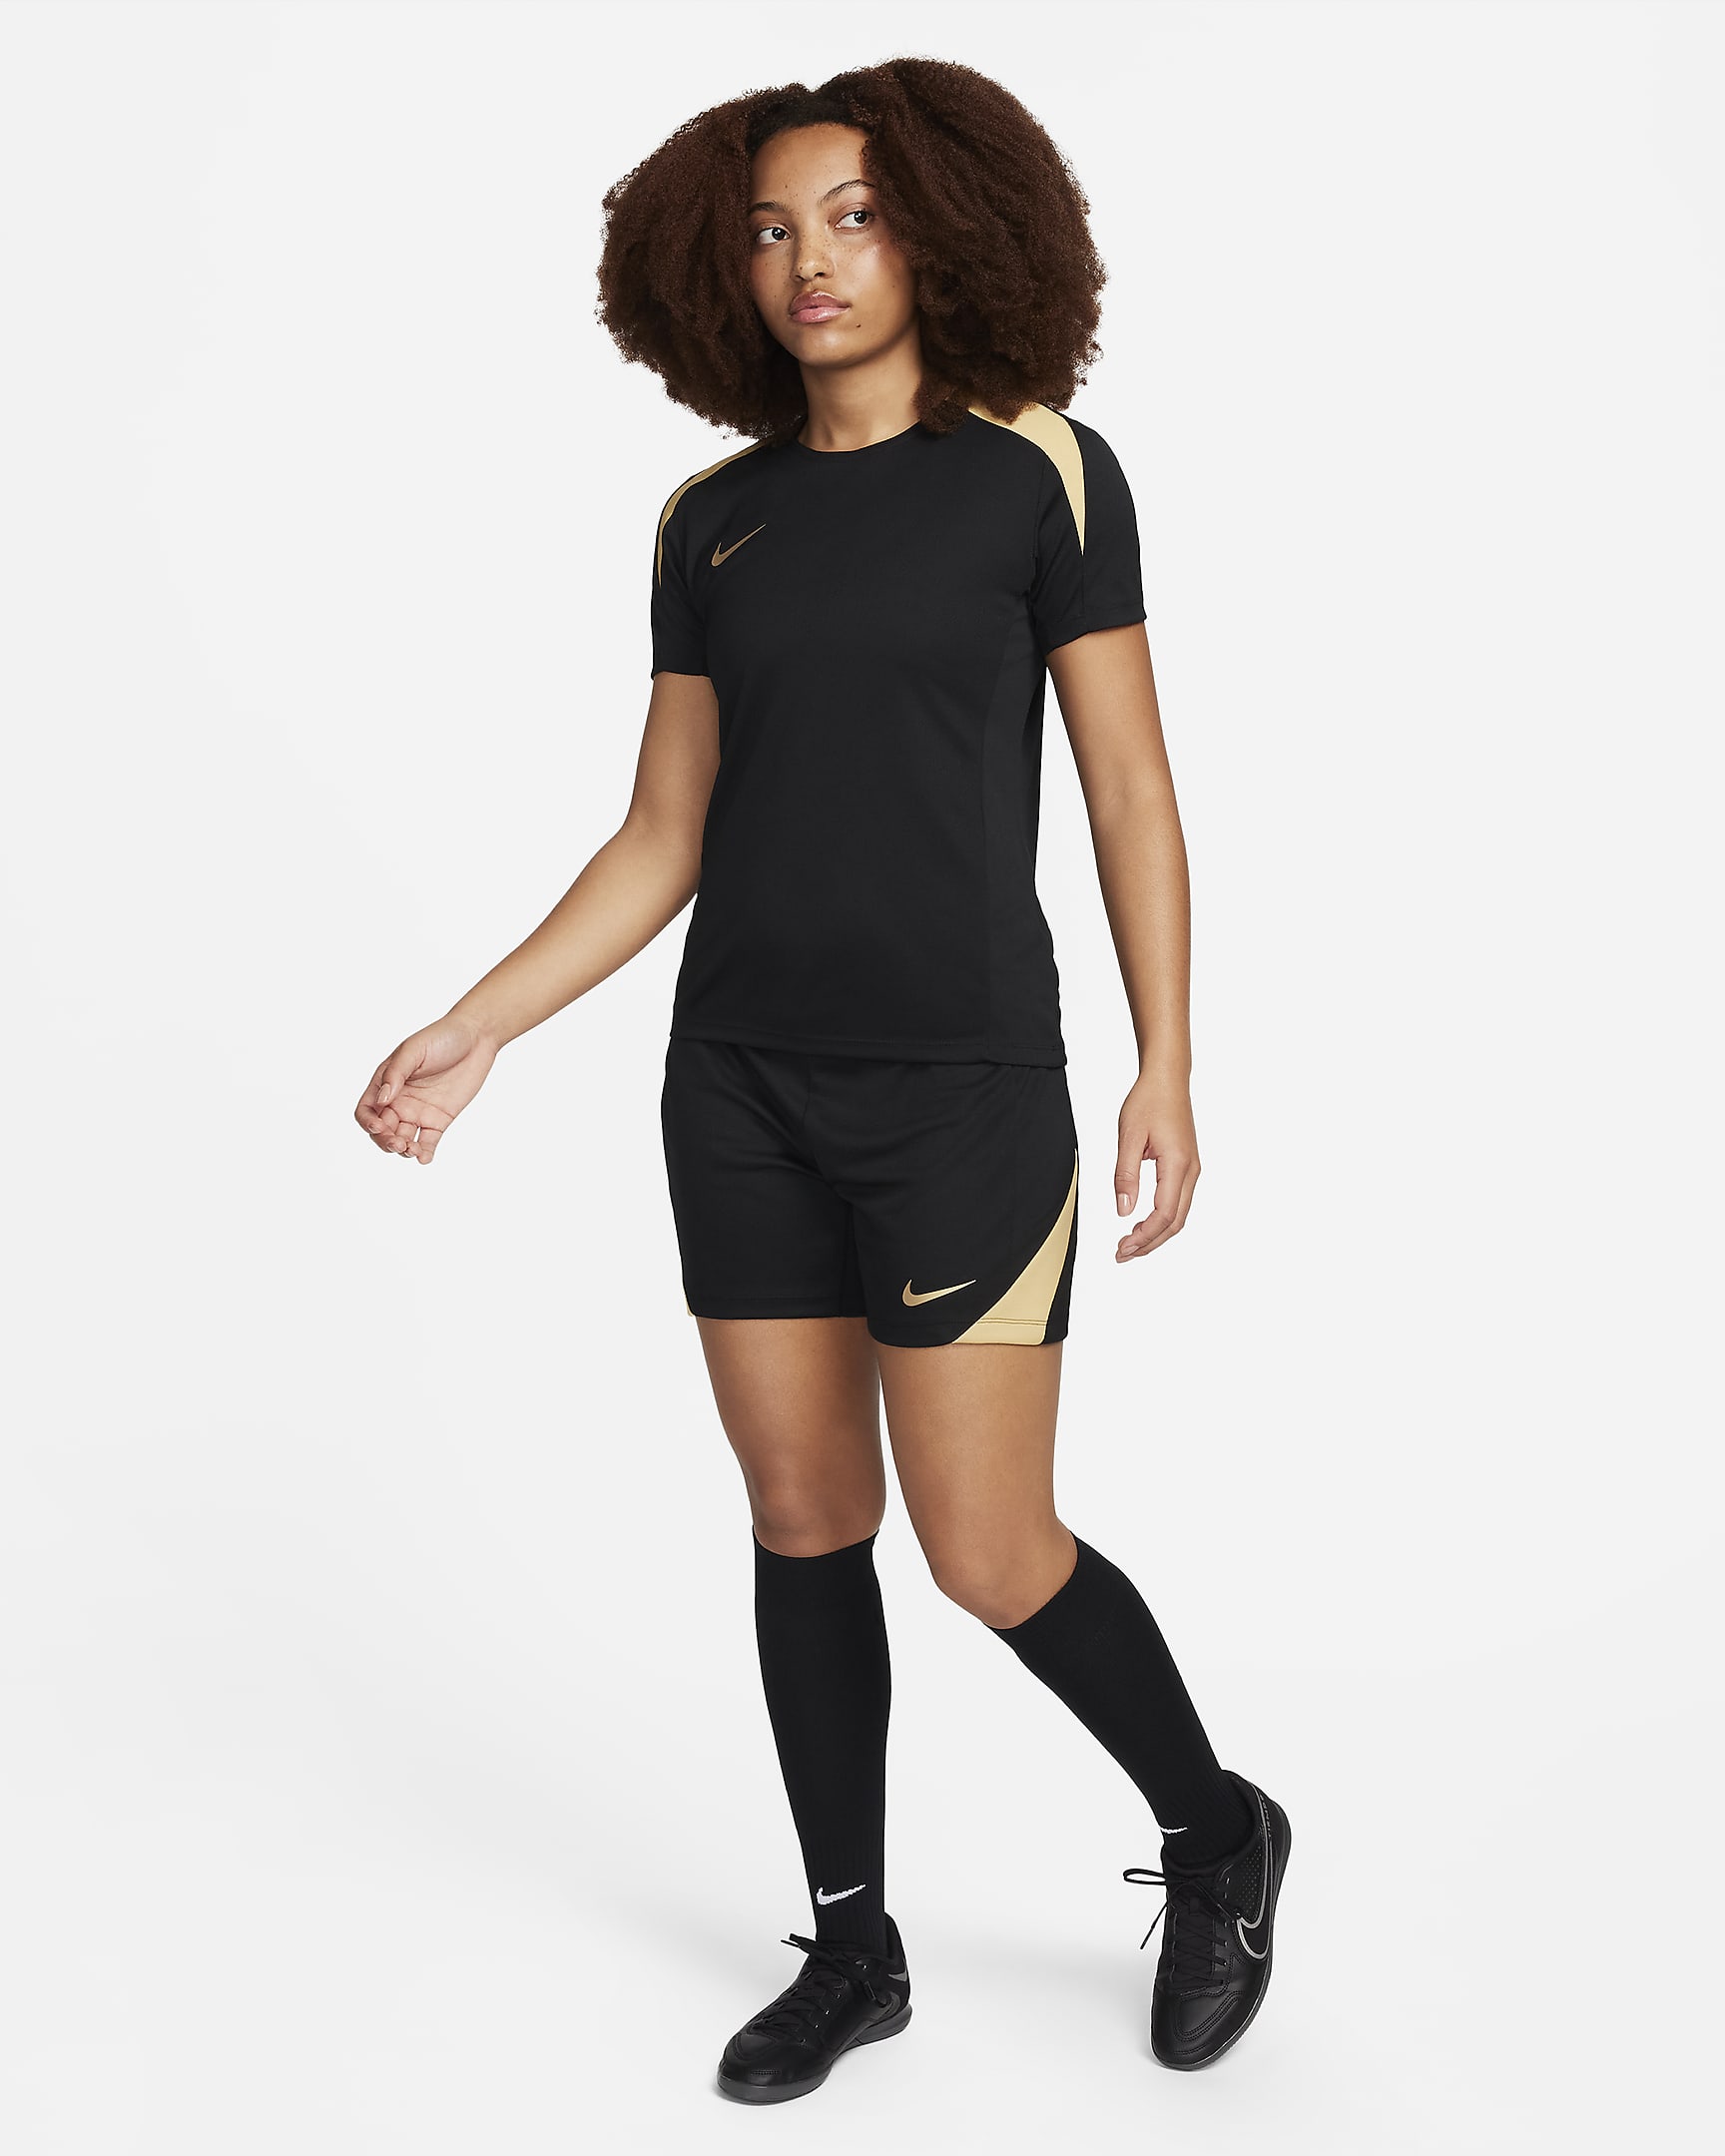 Nike Strike Women's Dri-FIT Short-Sleeve Football Top - Black/Jersey Gold/Metallic Gold